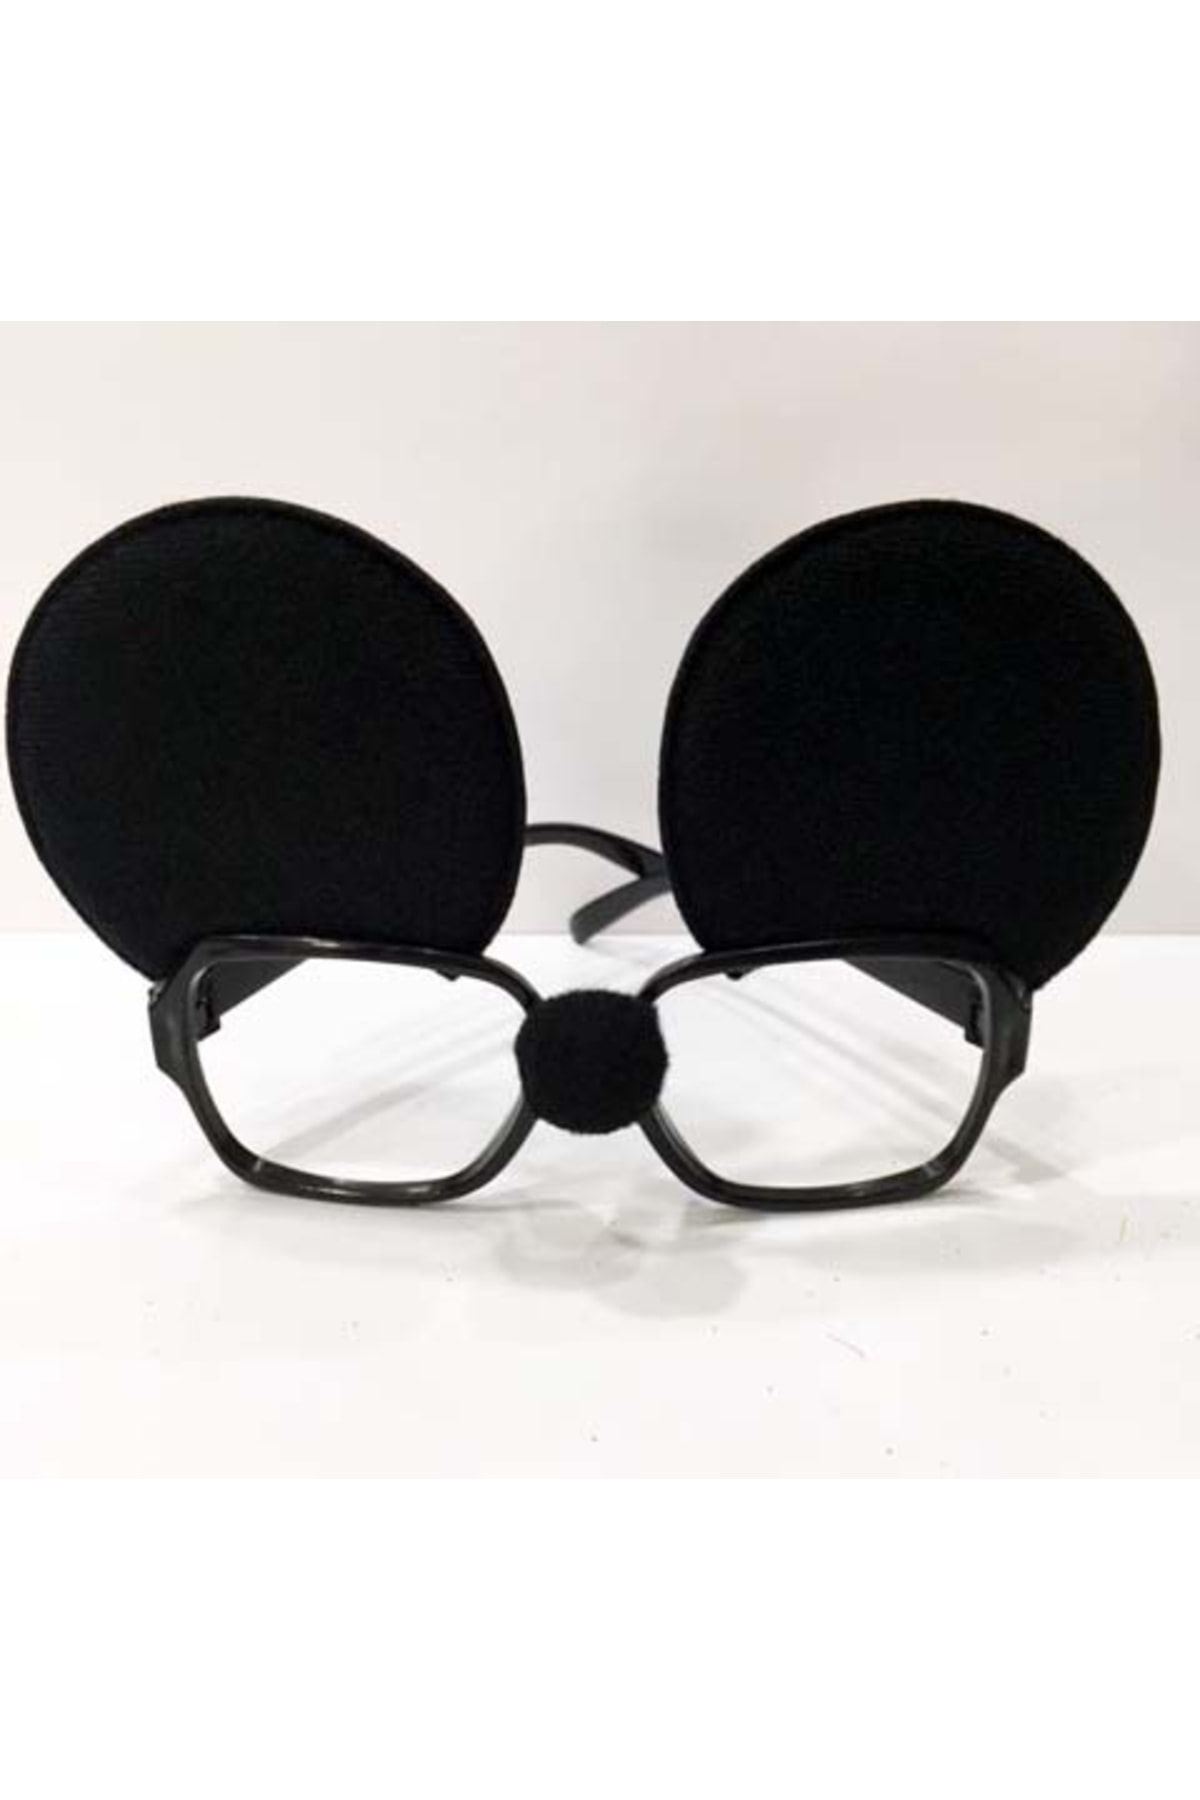 KAYAMU Mickey Mouse Gözlüğü